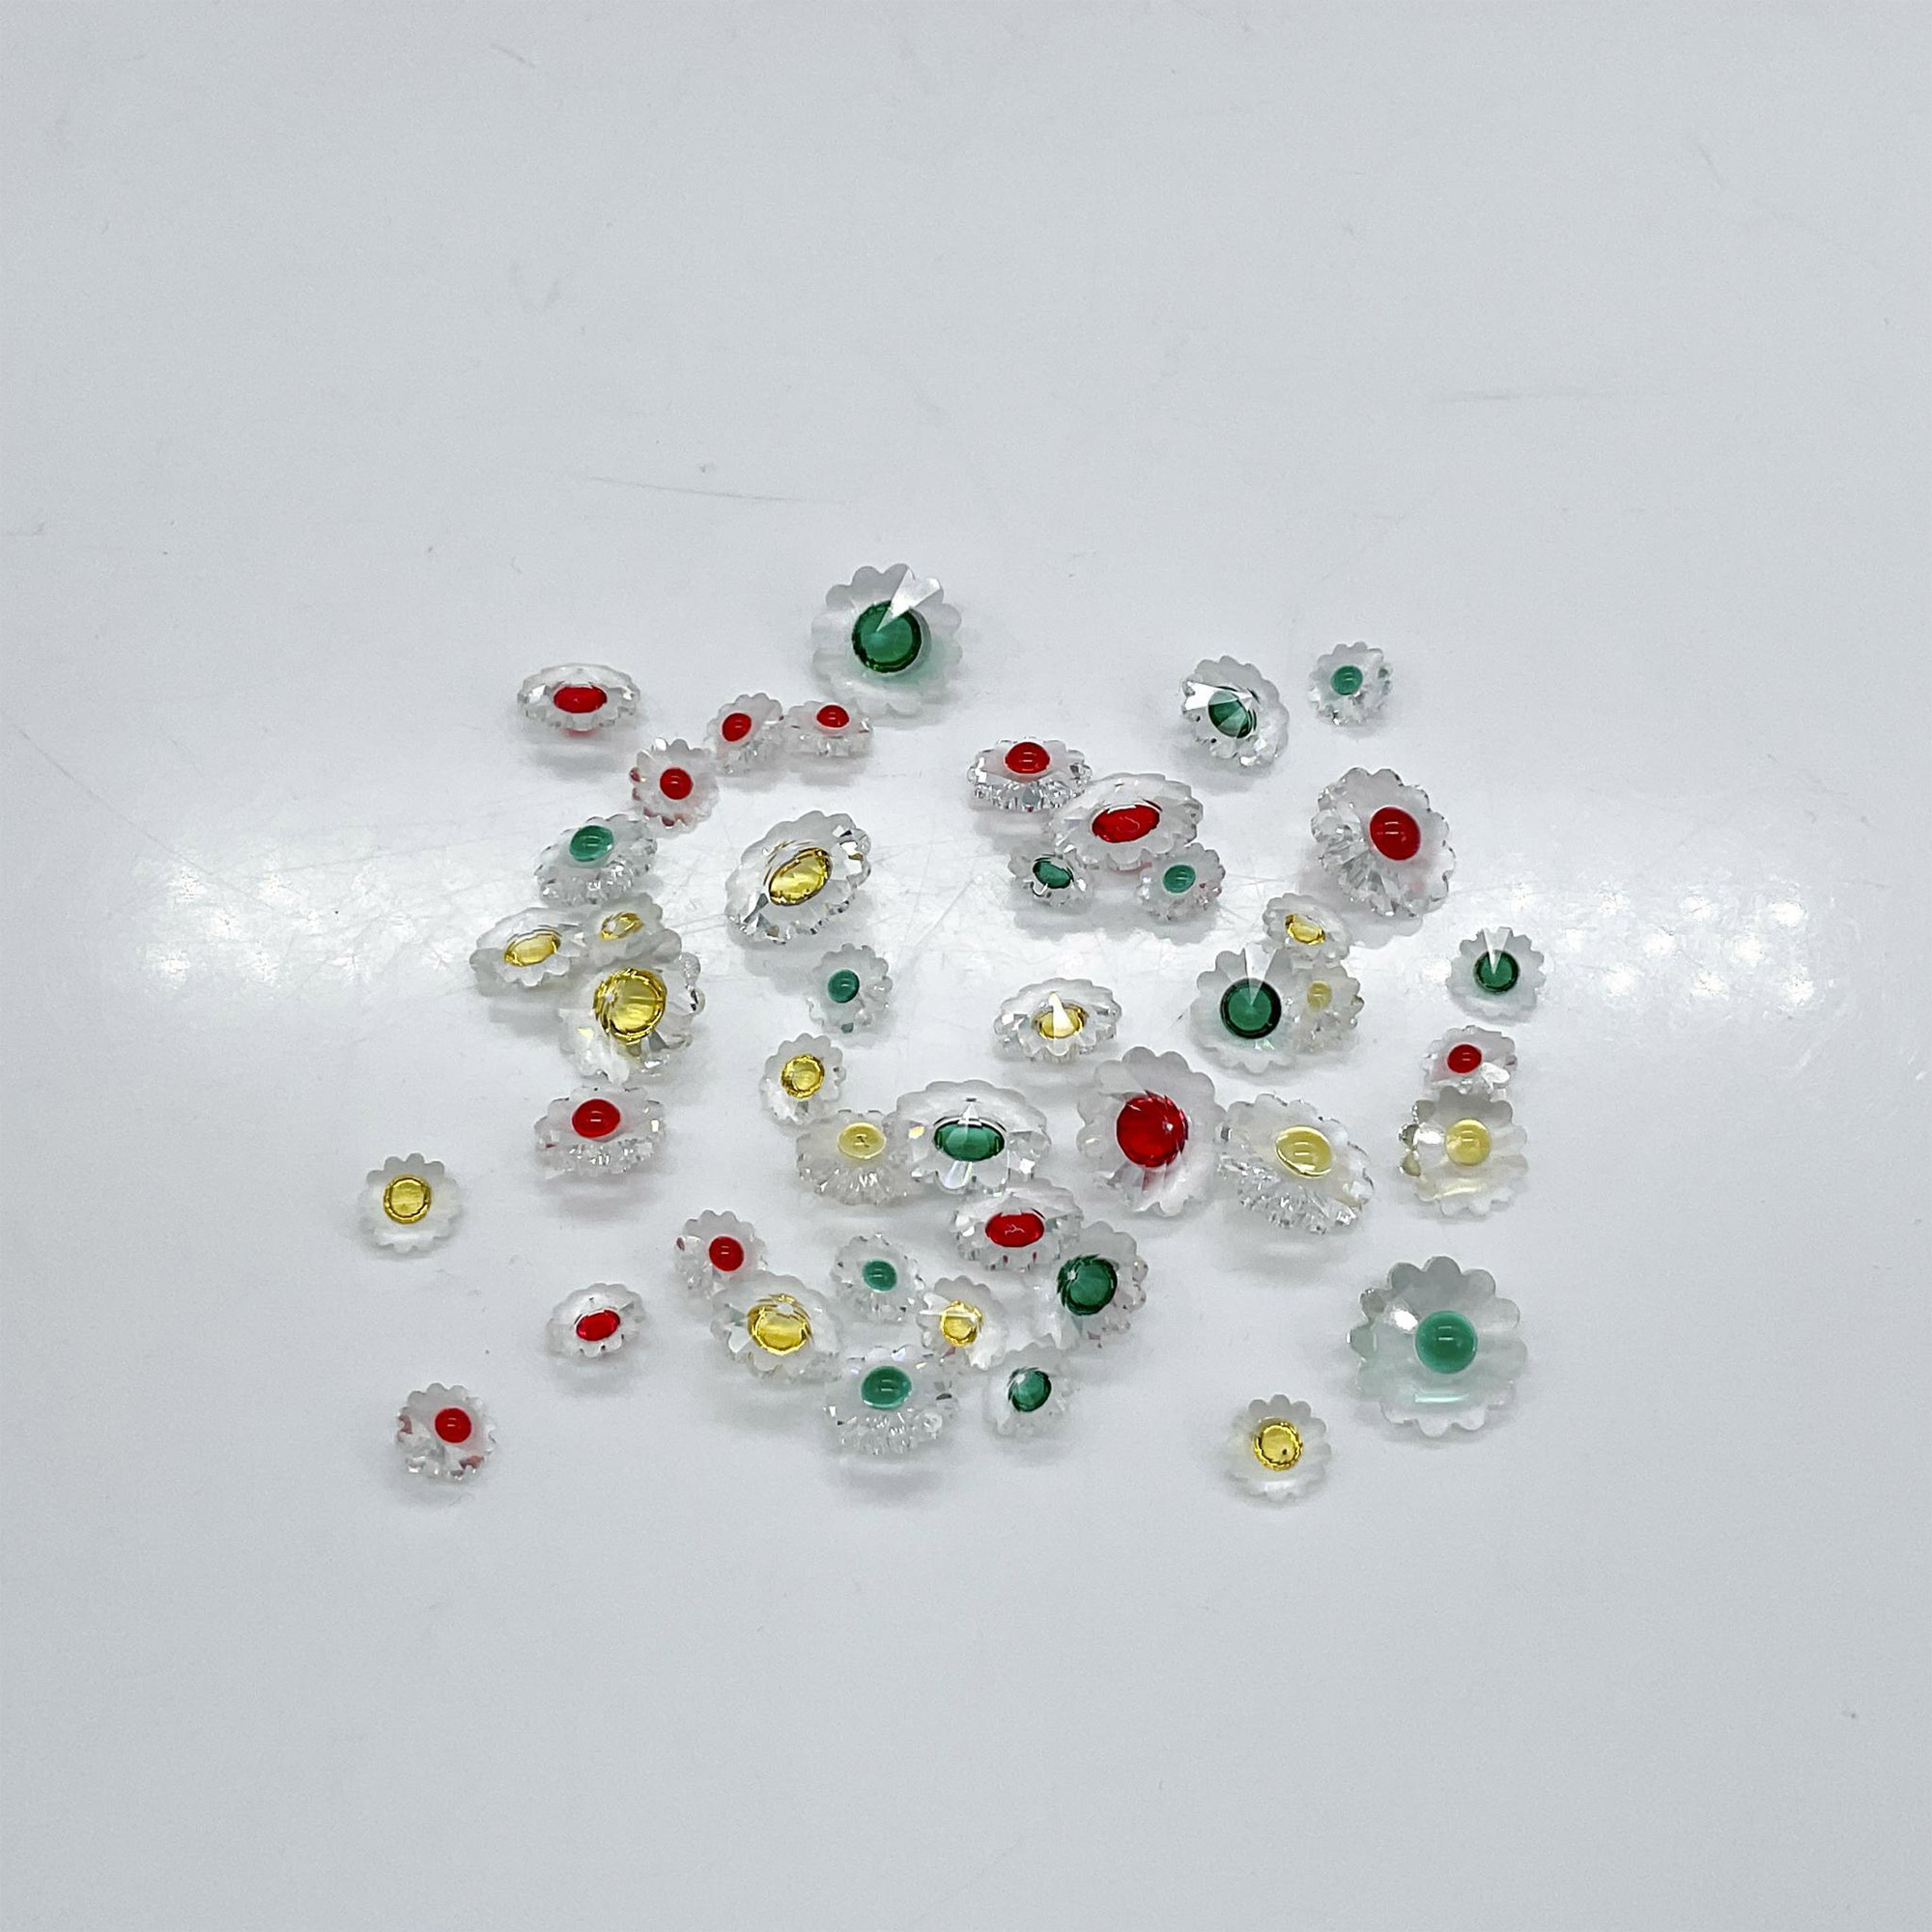 4pc Swarovski Crystal Decorative Elements, Flowers + Hearts - Image 5 of 5